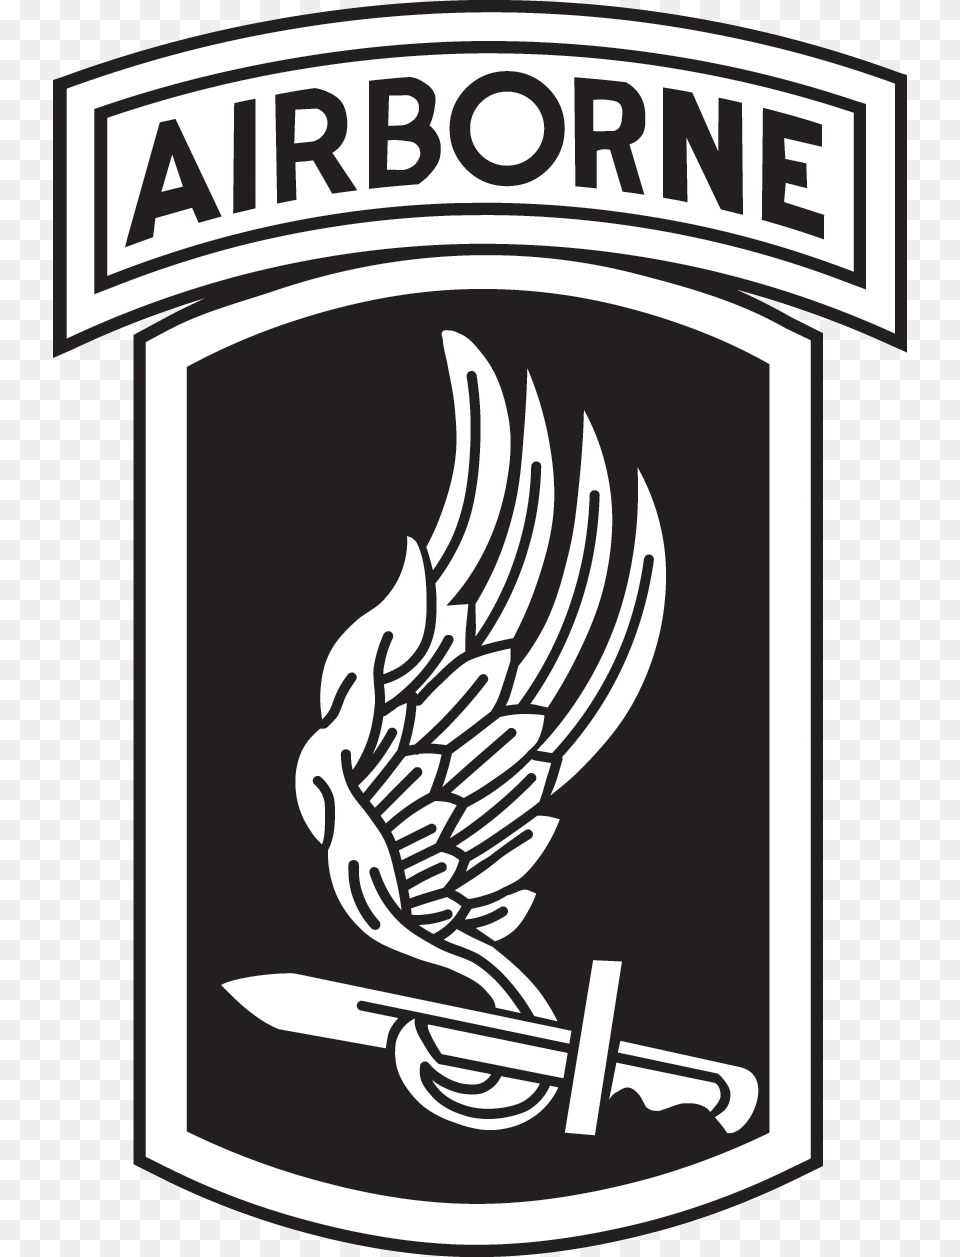 173rd Airborne Brigade 173rd Airborne Insignia Black And White, Emblem, Symbol, Logo Png Image